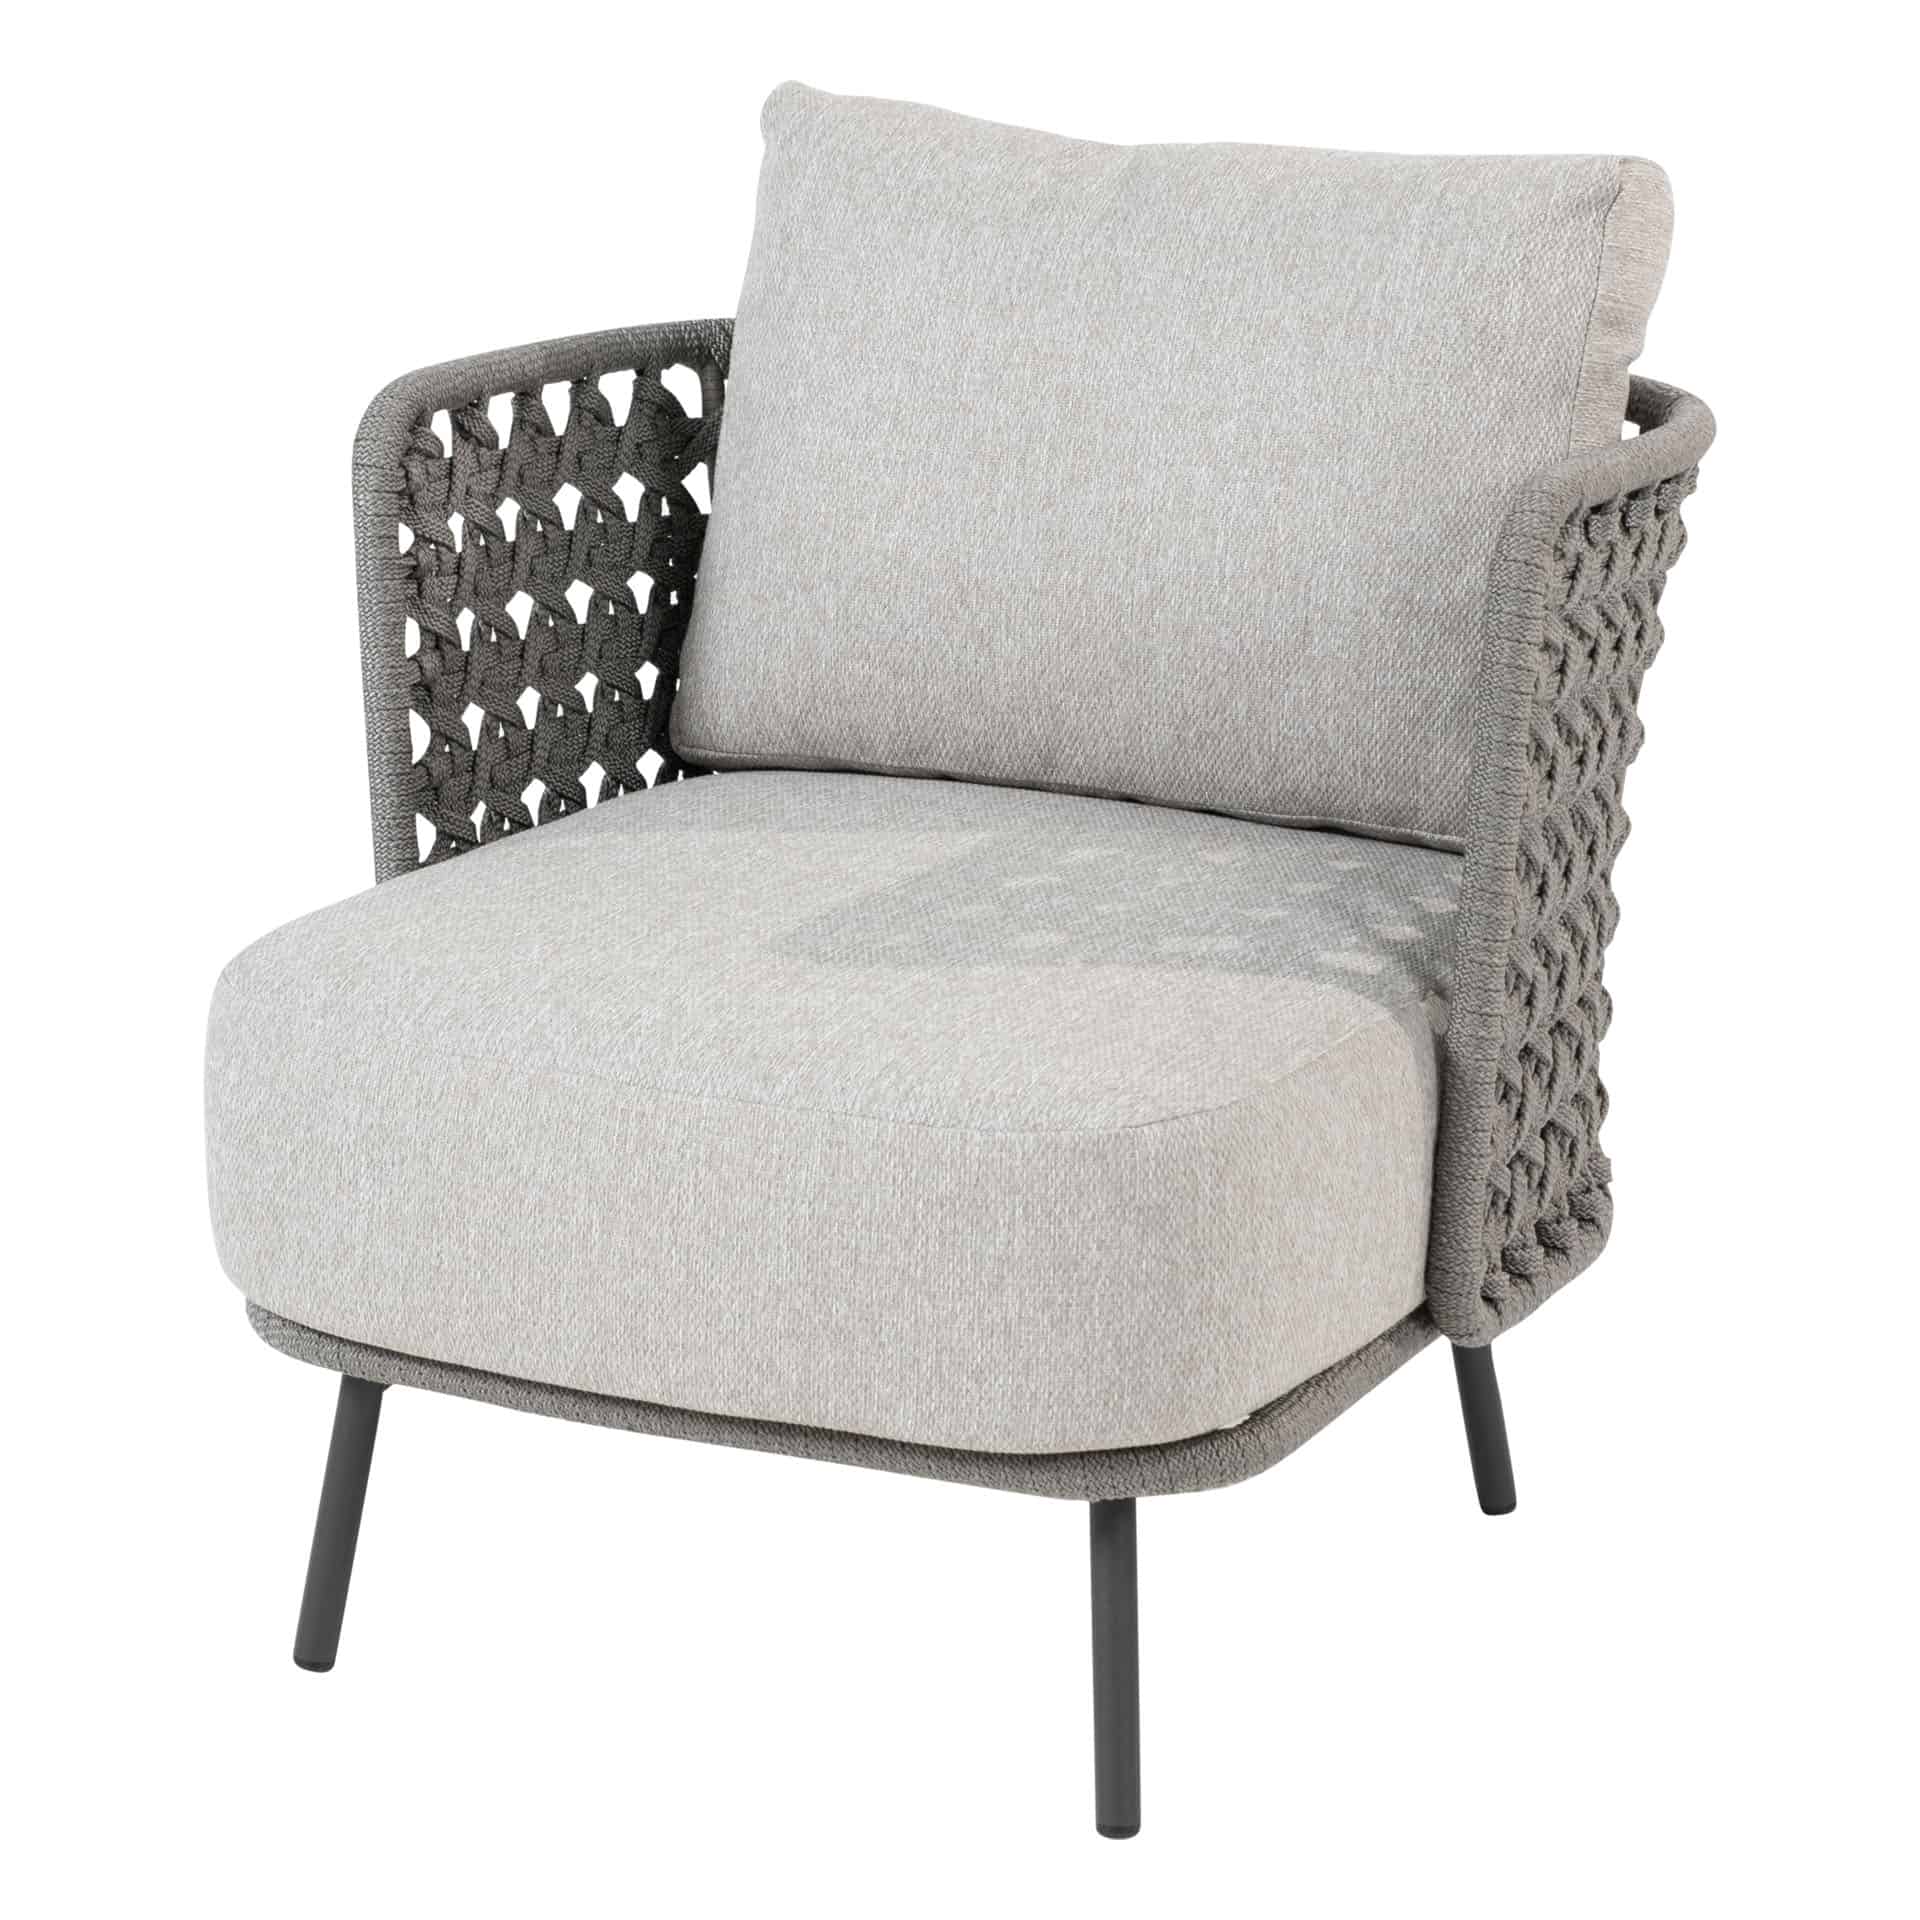 213908_-Palacio-living-chair-silvergrey-with-2-cushions-01